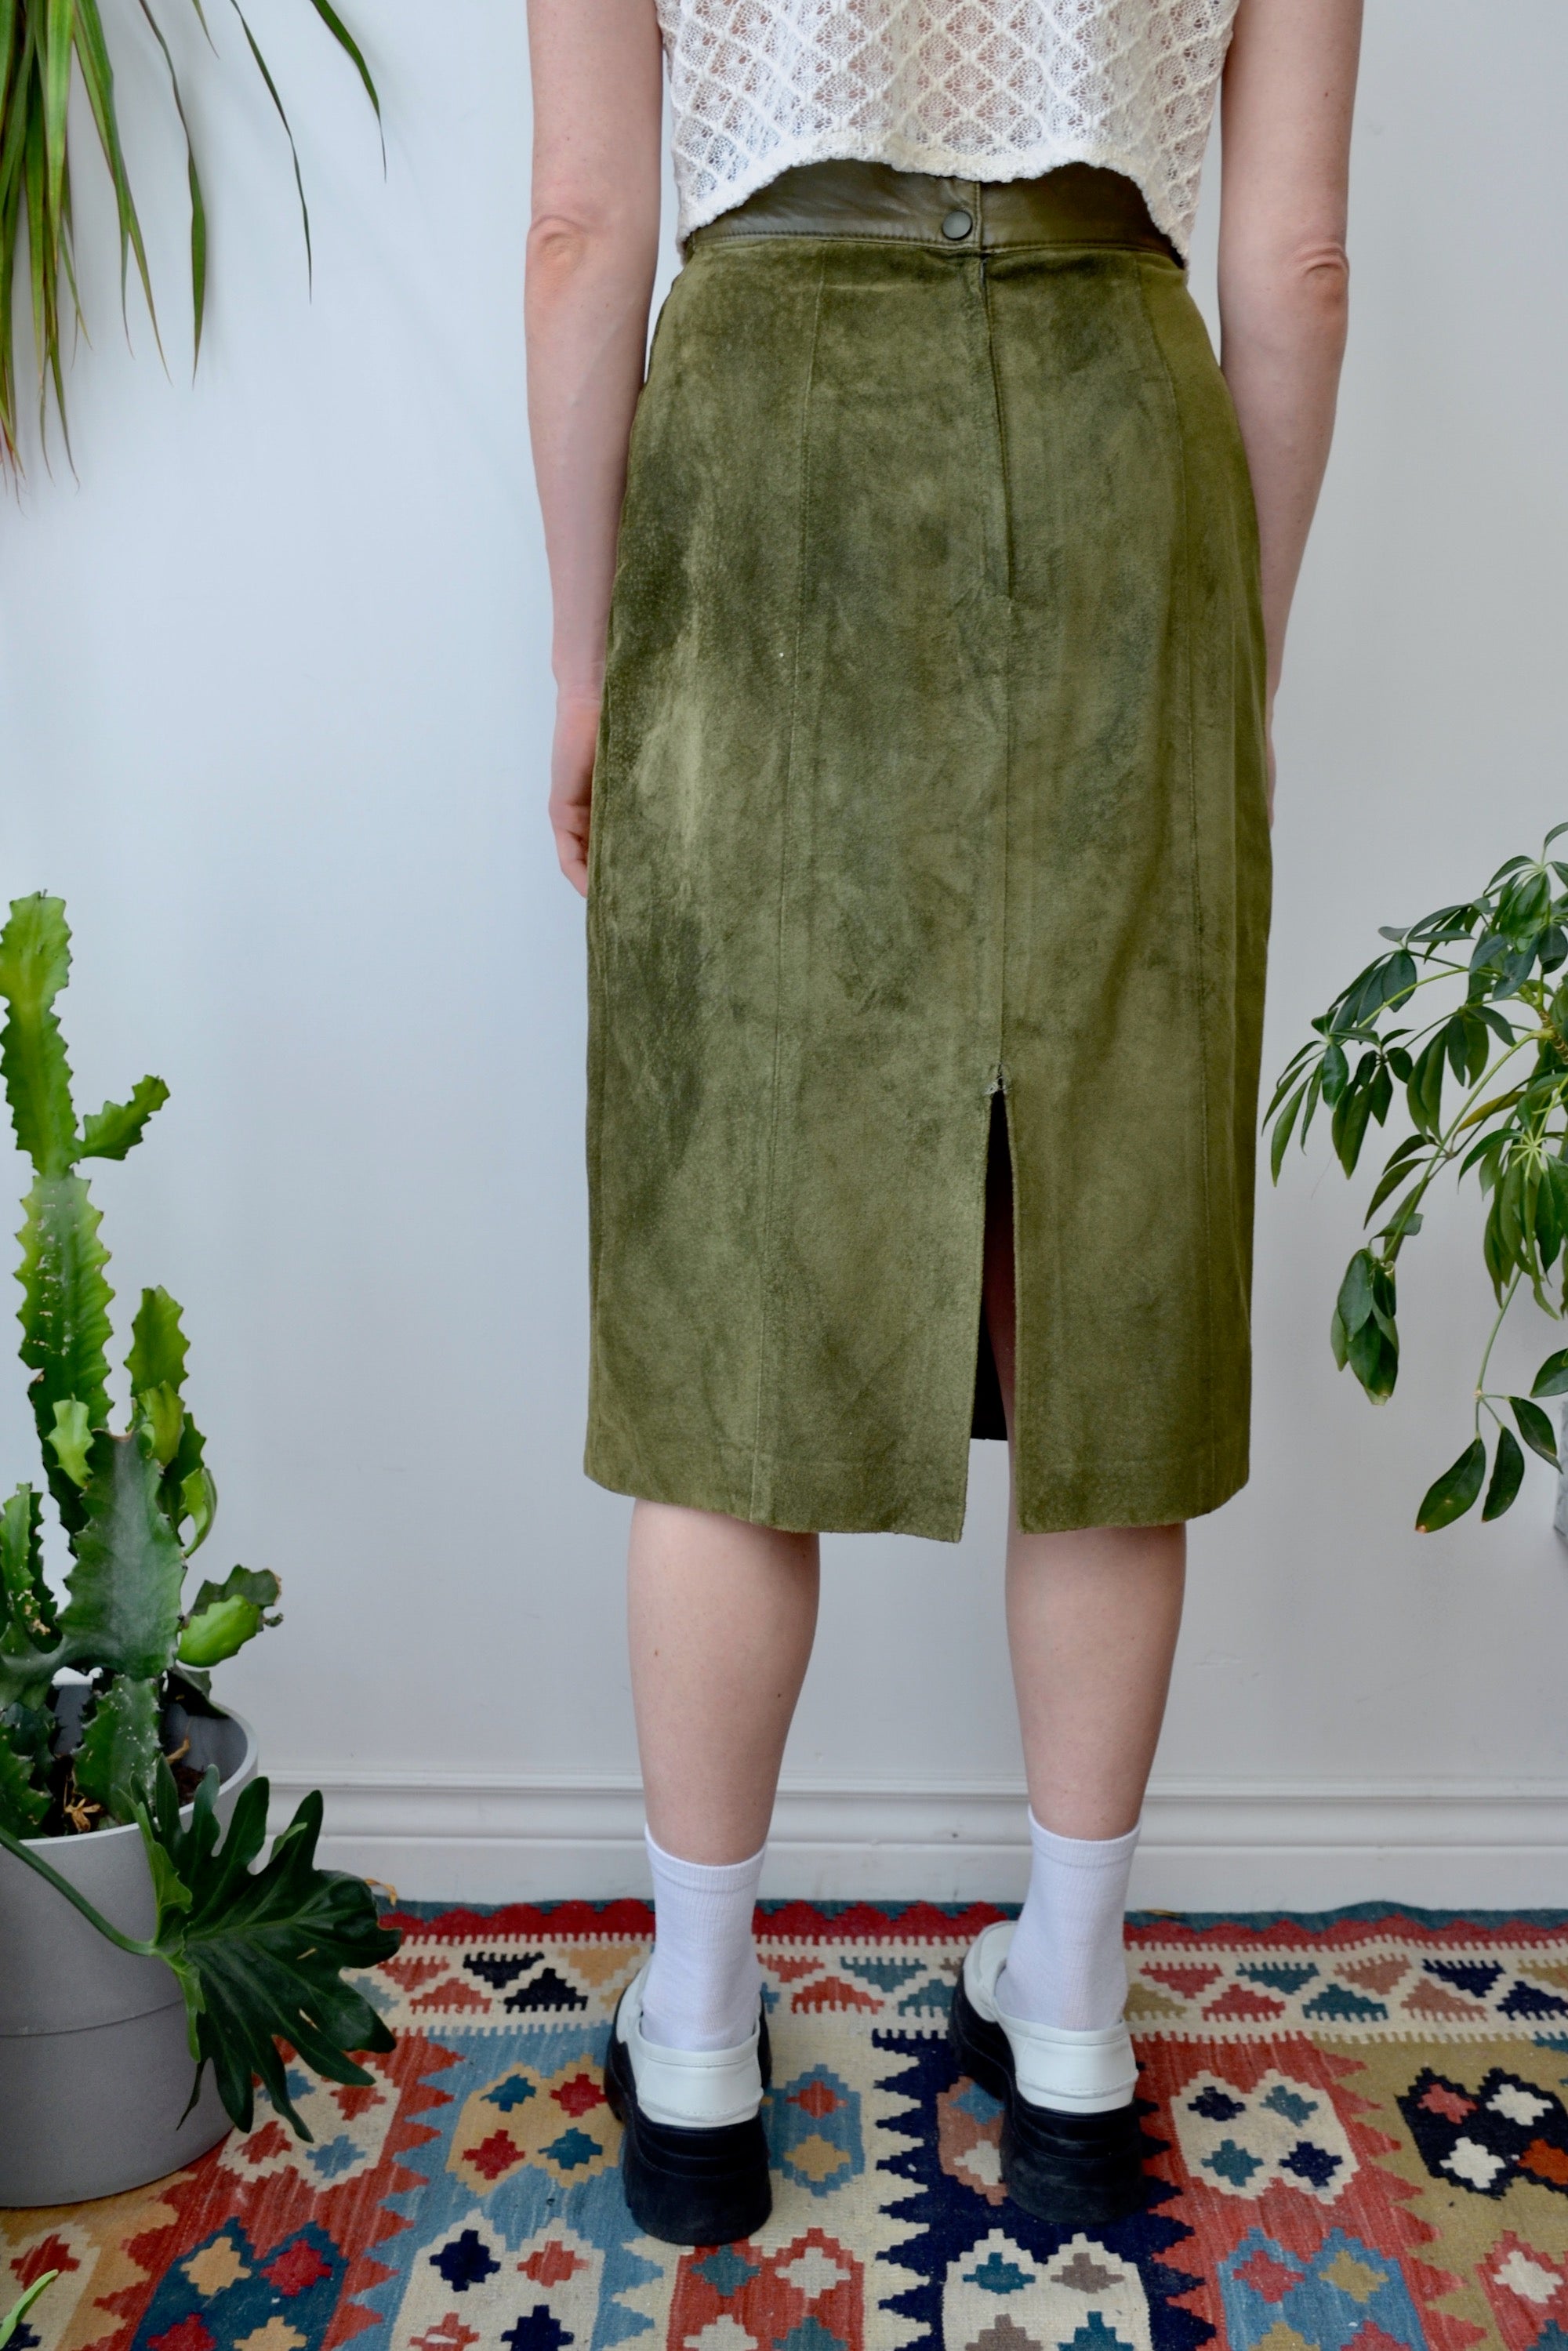 Mossy Suede Eighties Skirt